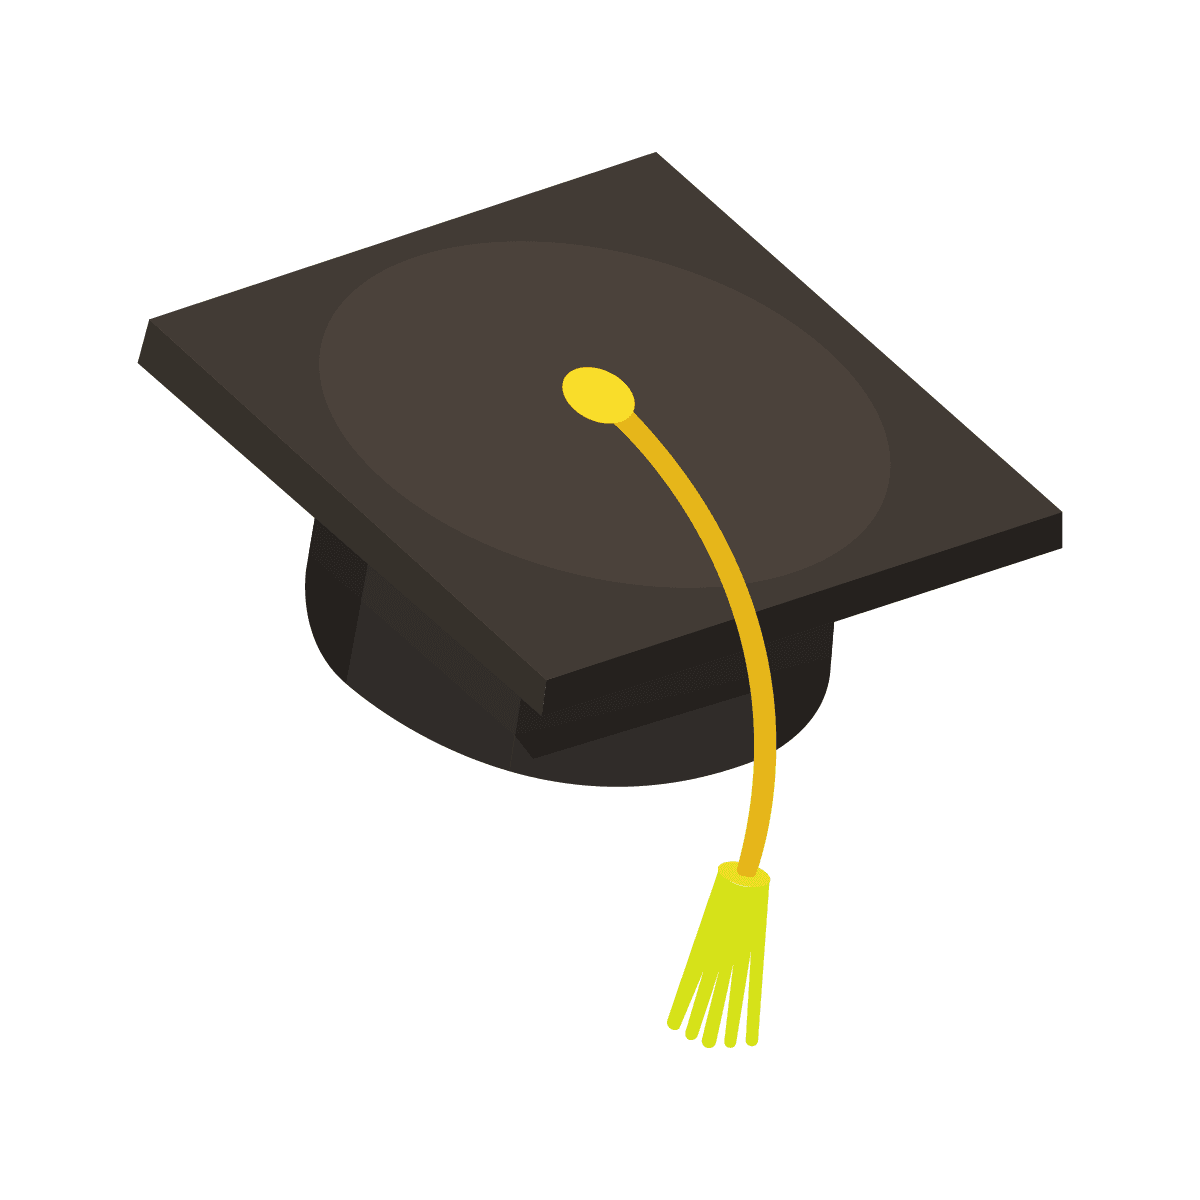 graduation cap illustration element in block style